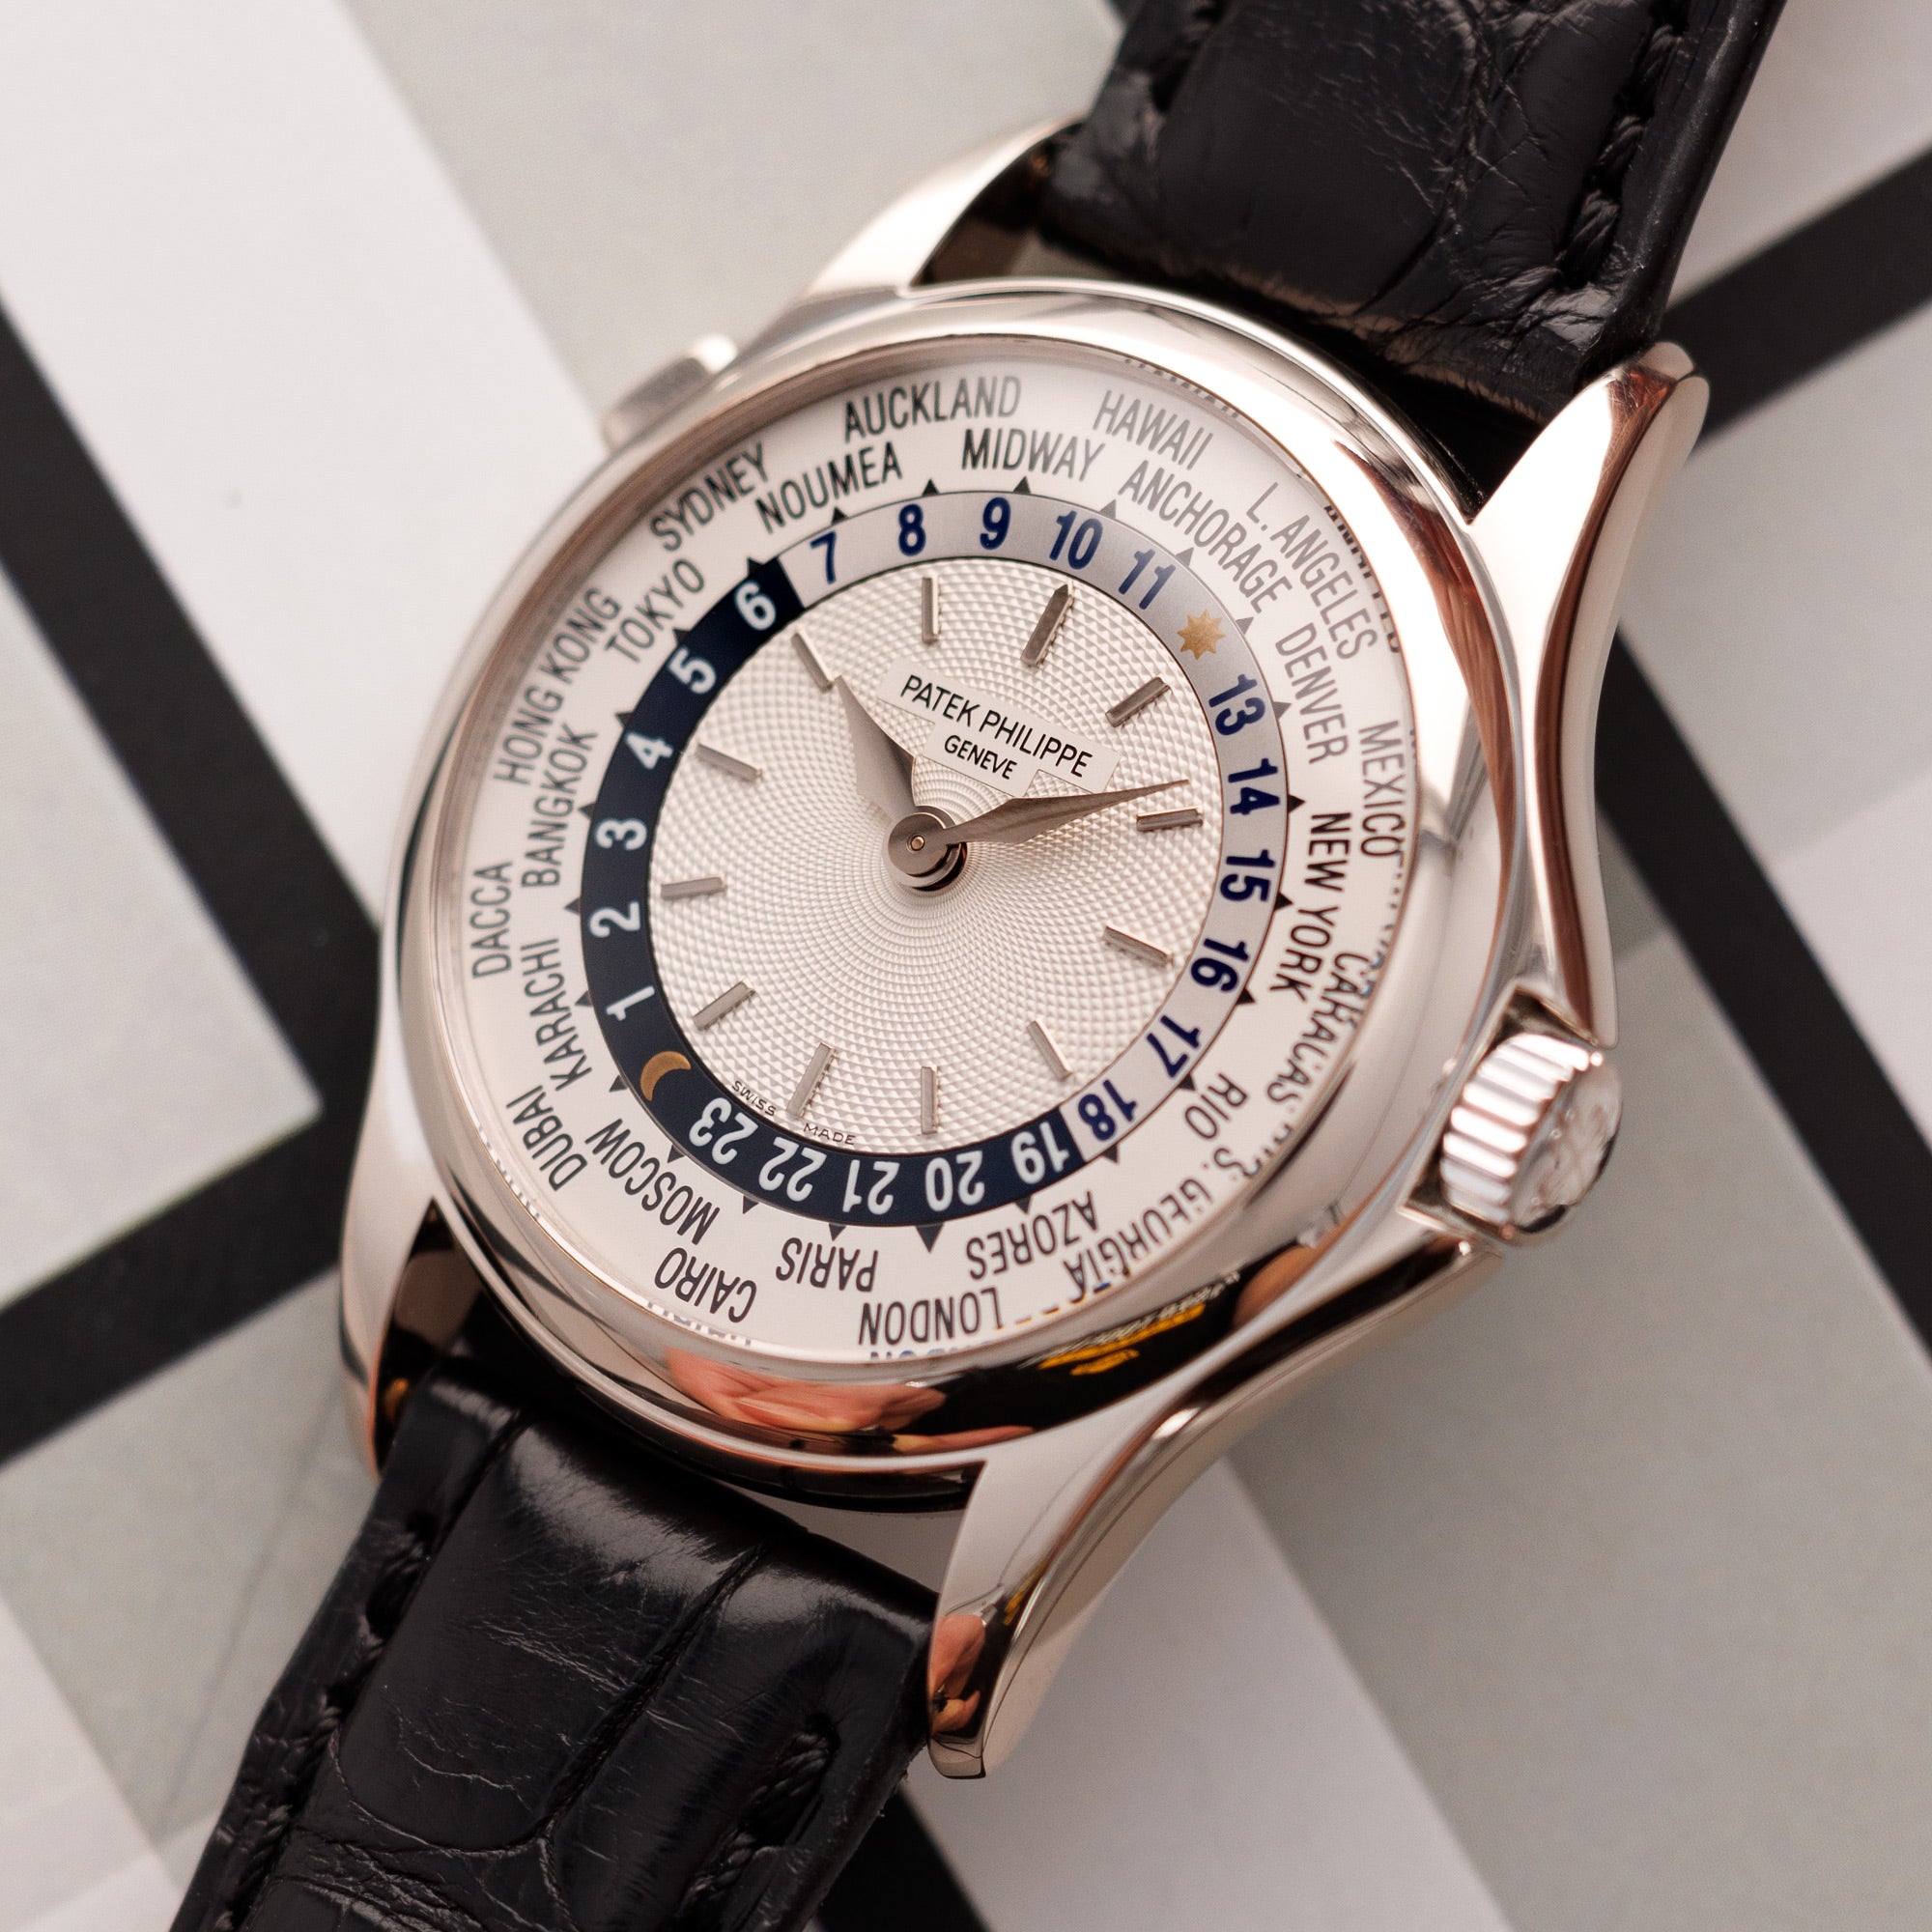 Patek Philippe - Patek Philippe White Gold World Time Watch Ref. 5110G - The Keystone Watches